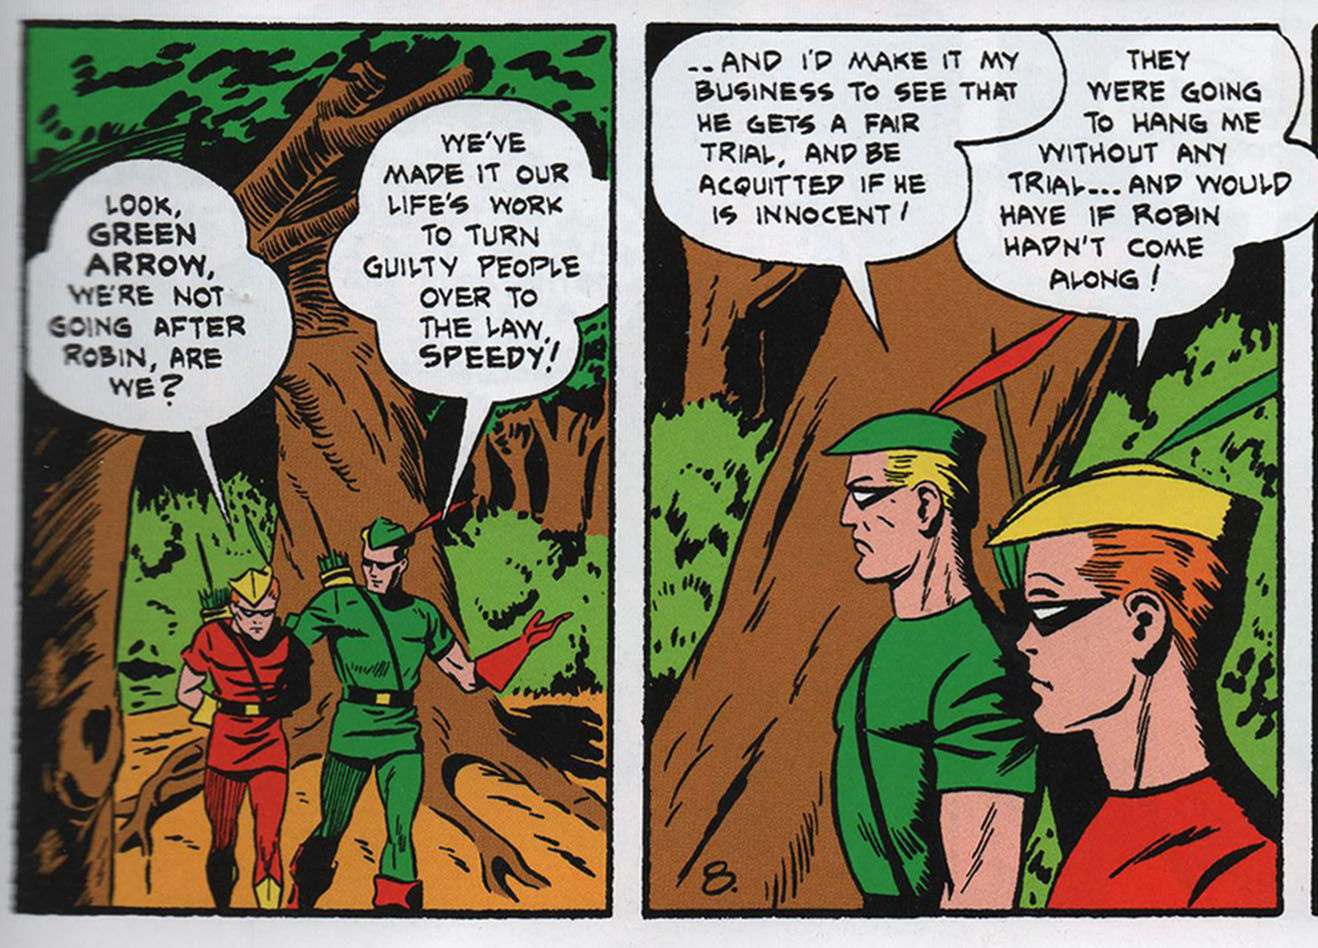 Green Arrow and Speedy discuss giving Robin Hood a fair trial